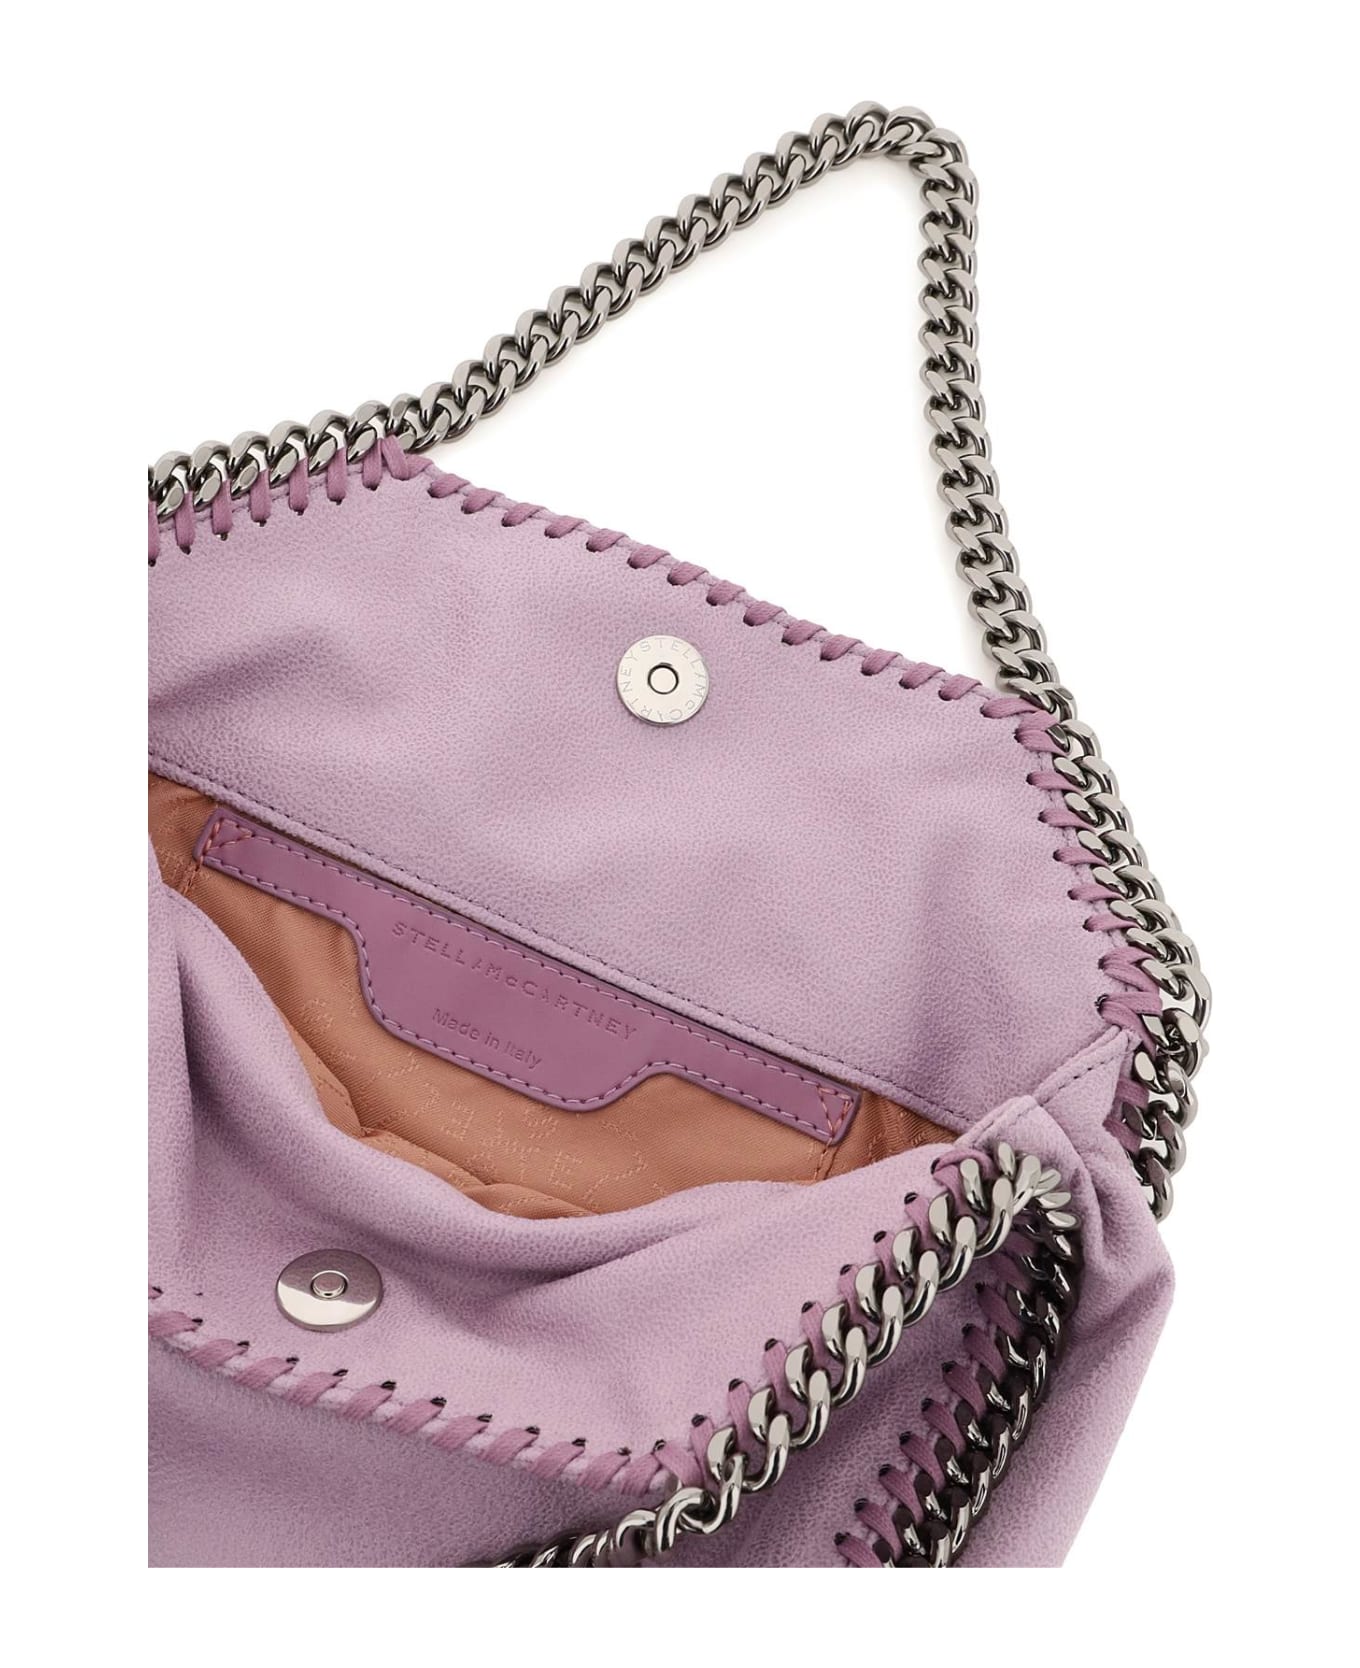 Stella McCartney Falabella Shoulder Bag - Lilac